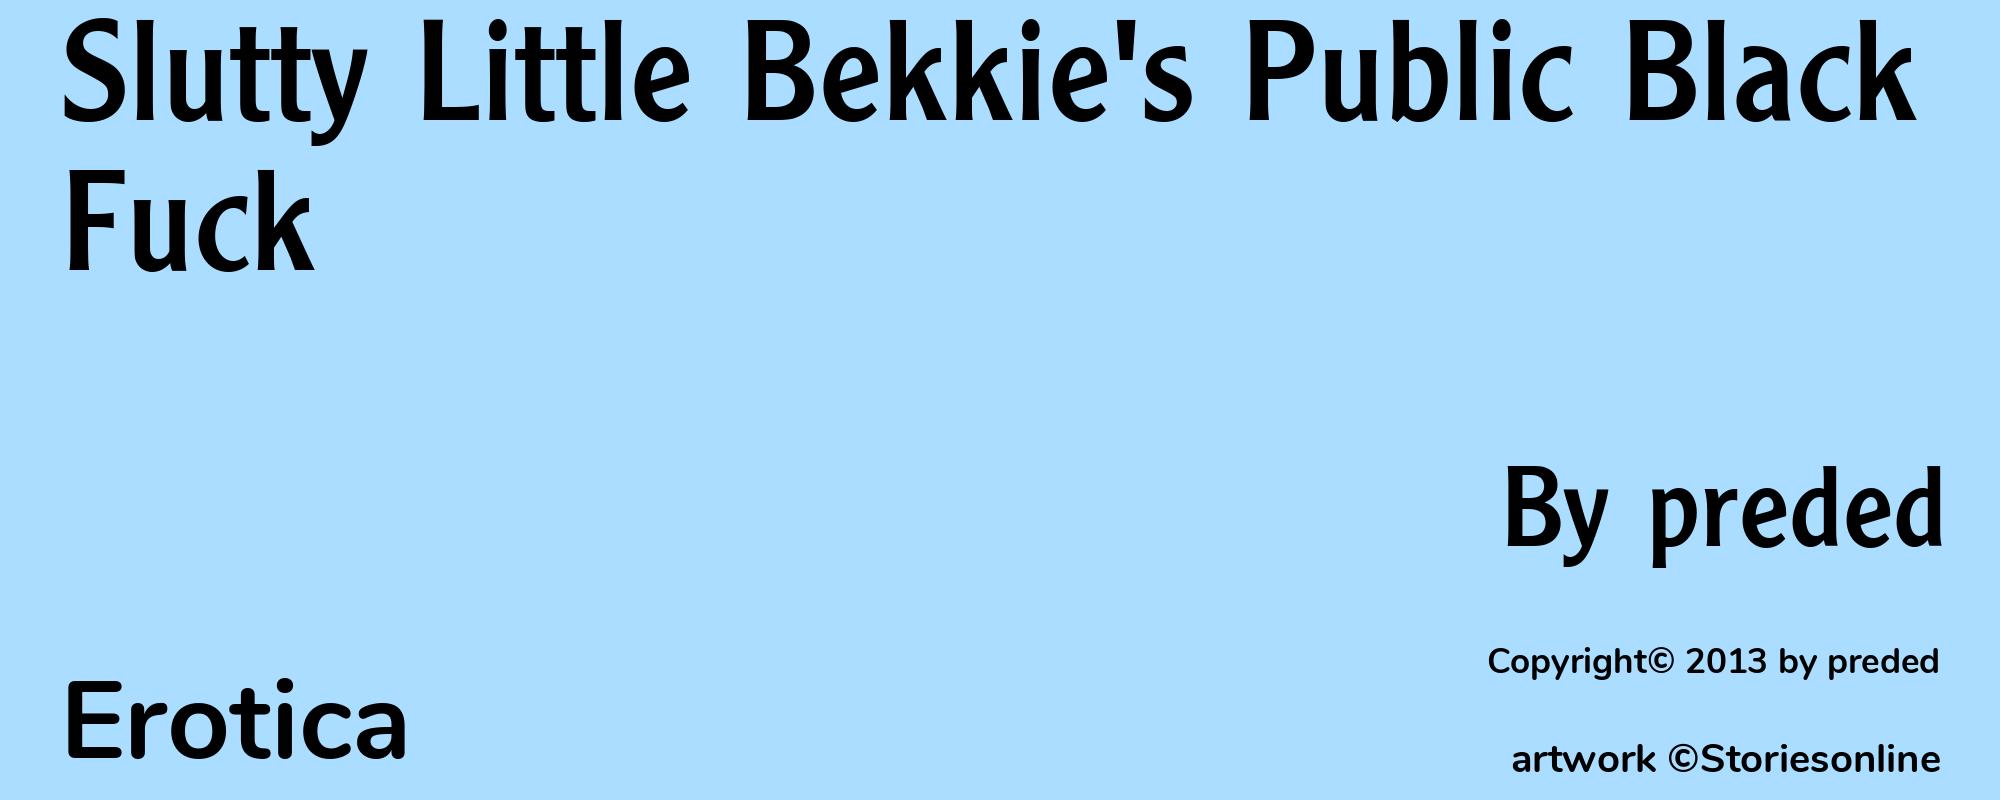 Slutty Little Bekkie's Public Black Fuck - Cover